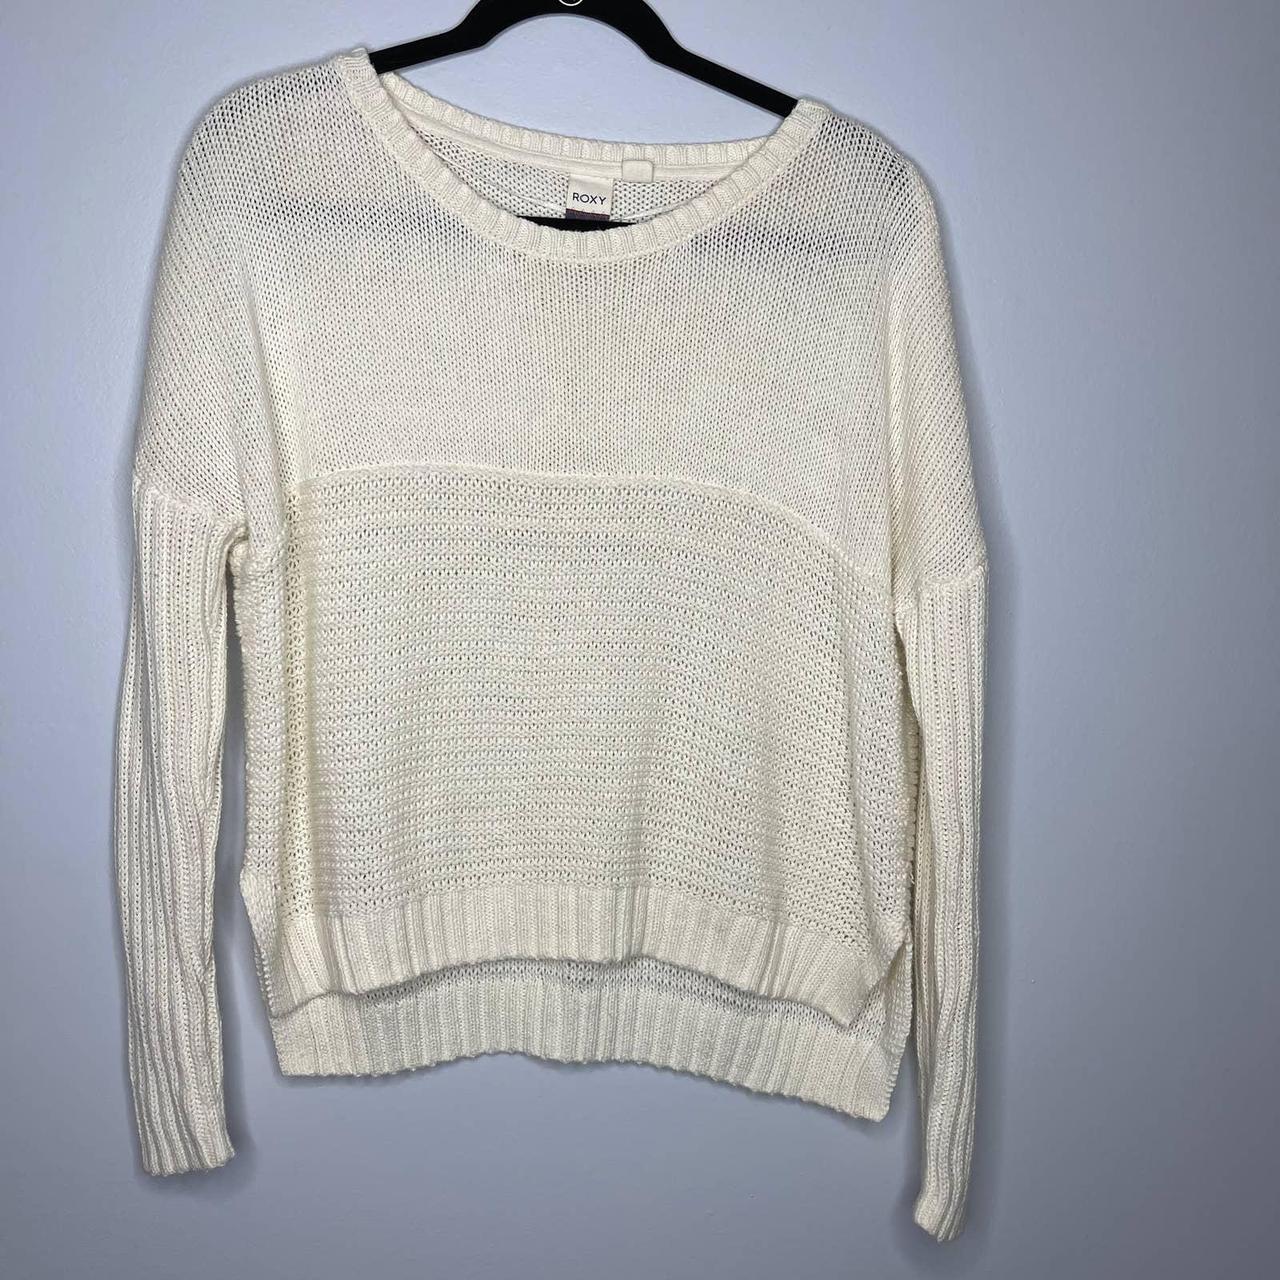 Product Image 2 - Roxy cream crewneck sweater size